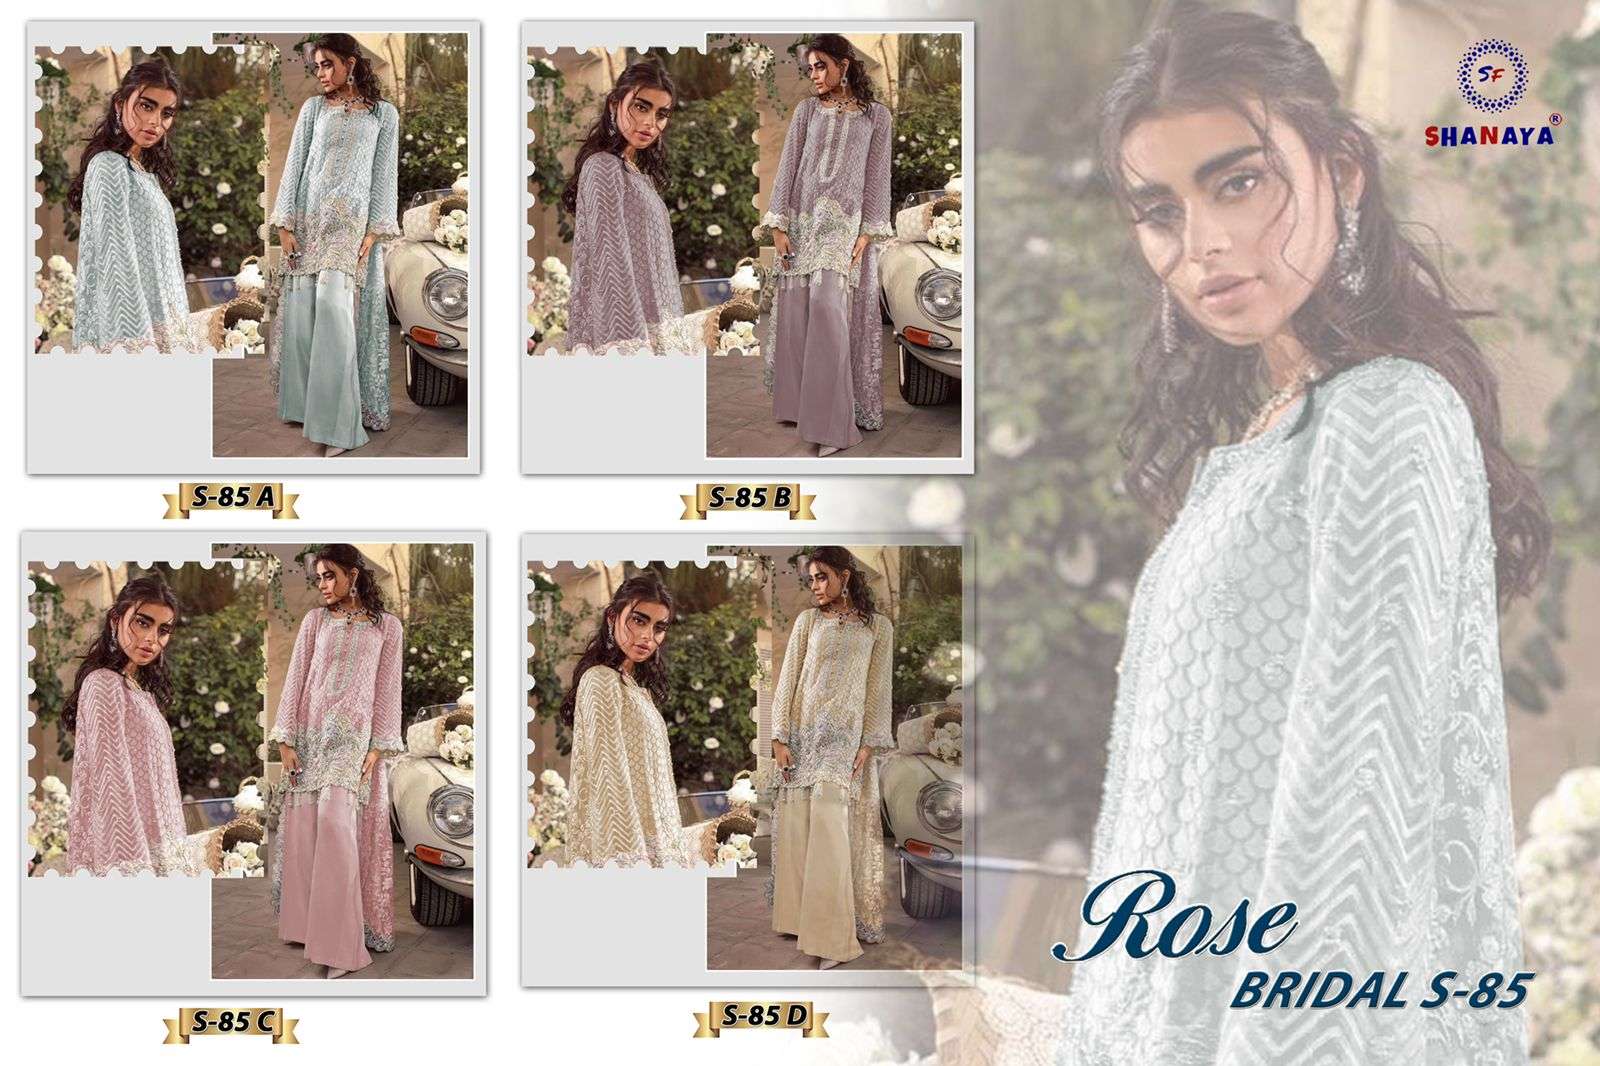 shanaya rose bridal 85 colour edition salwar kameez collection wholesale price surat